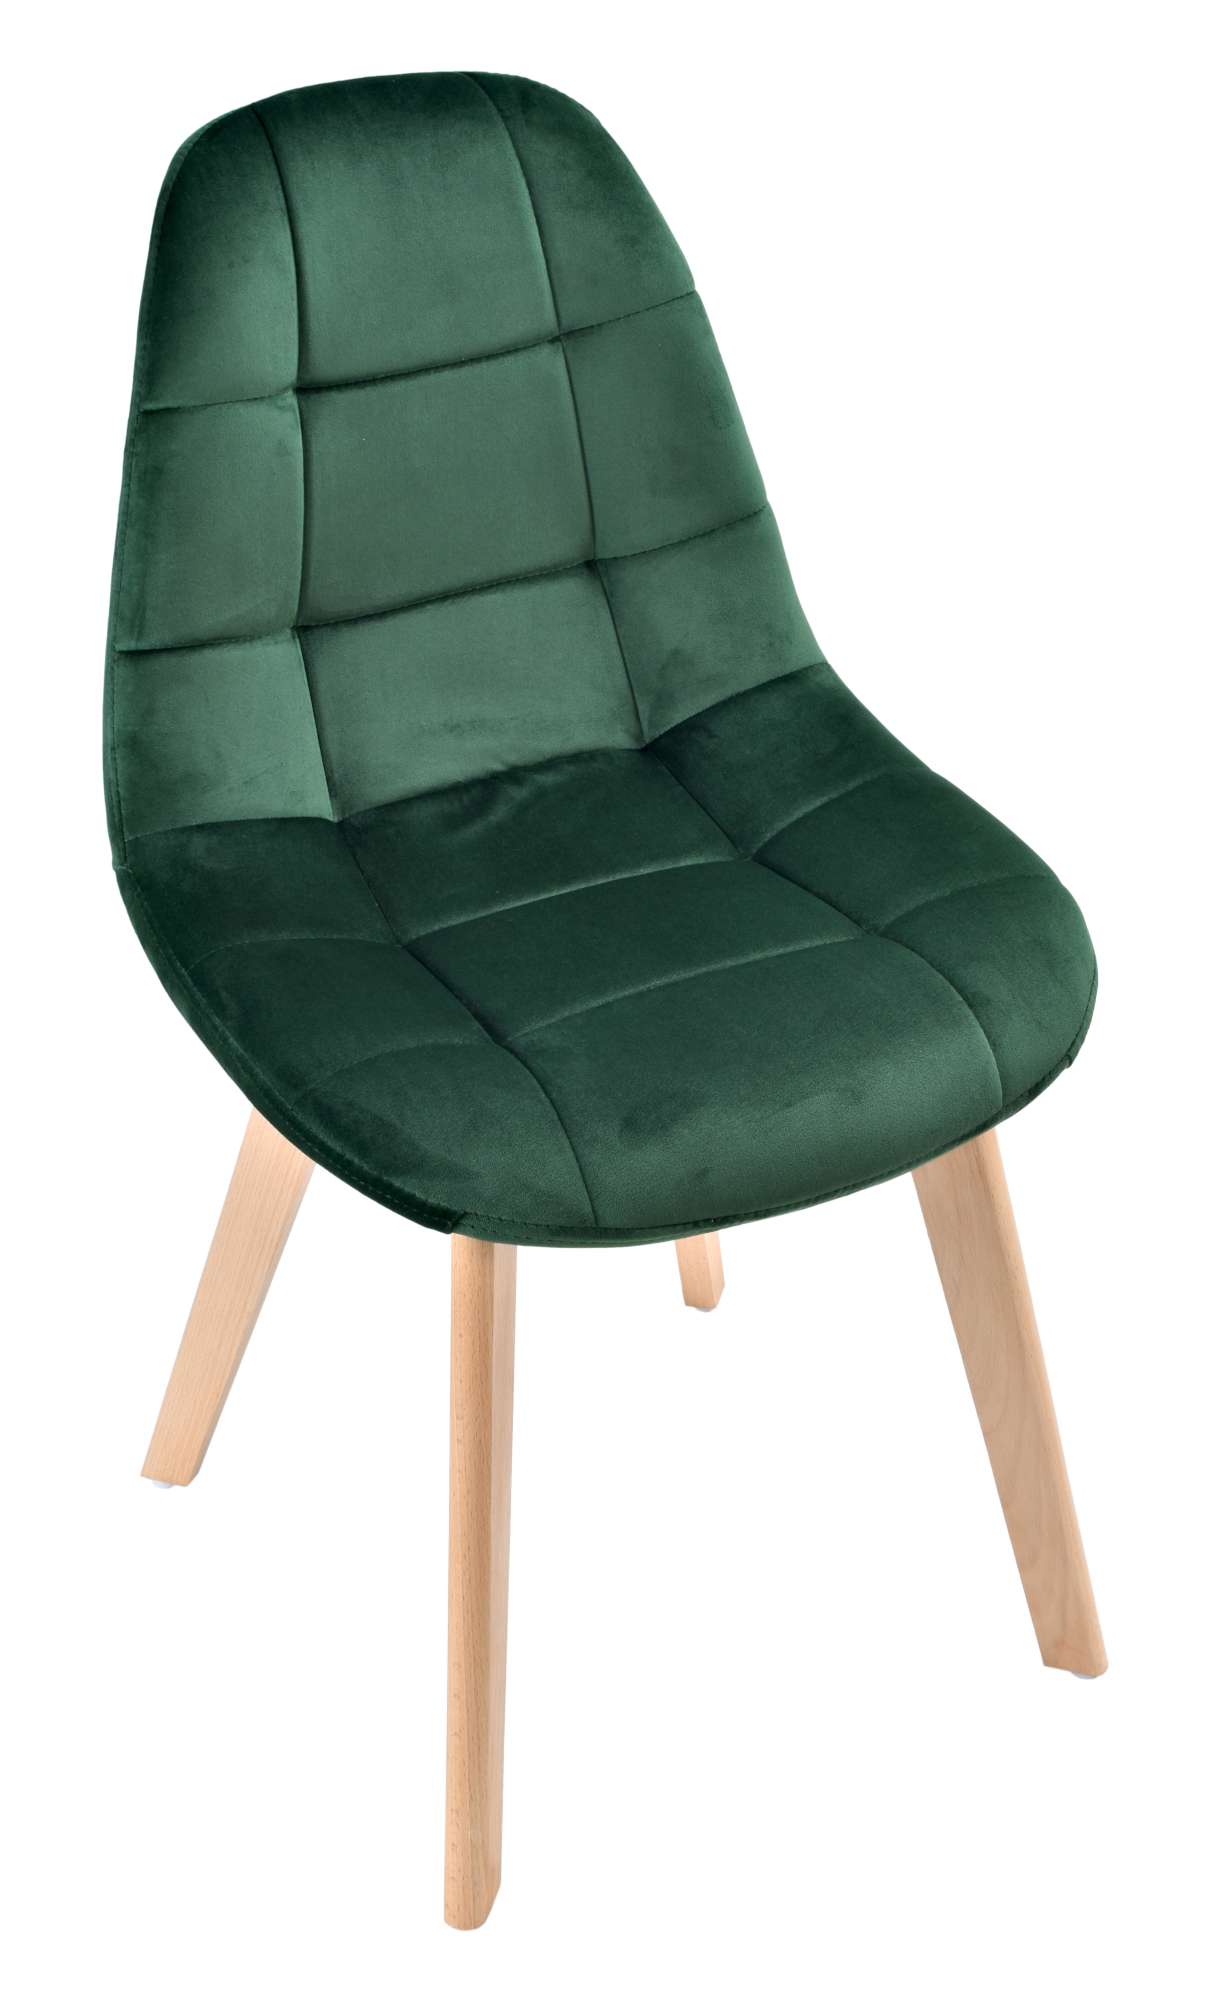 krzeslo tapicerowane aksamitne welurowe Callista